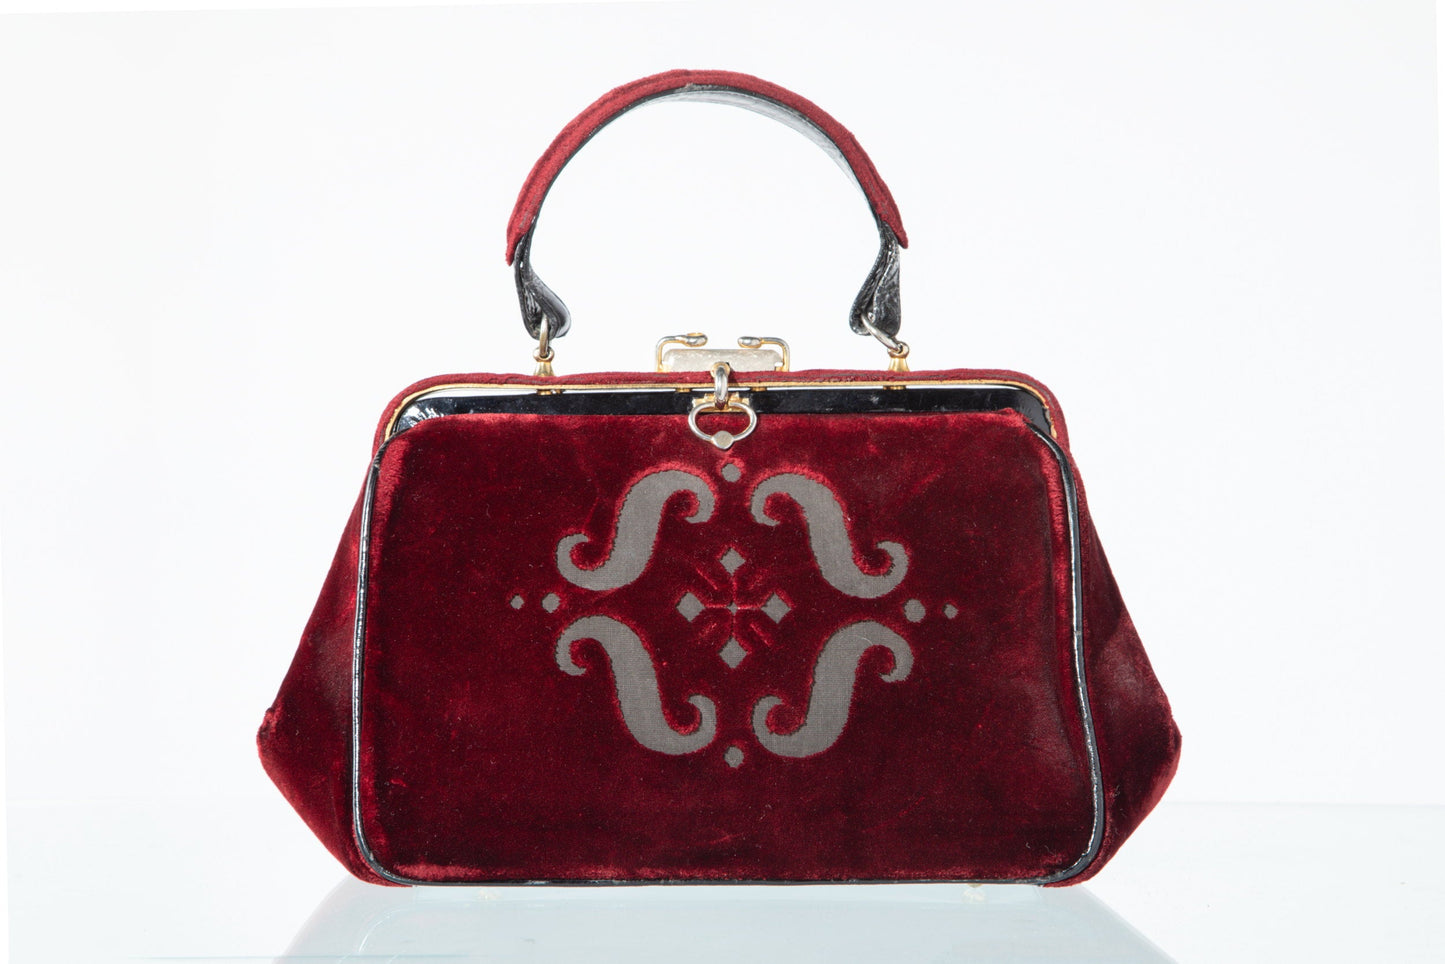 Roberta Di Camerino boredaux devoré velvet handbag